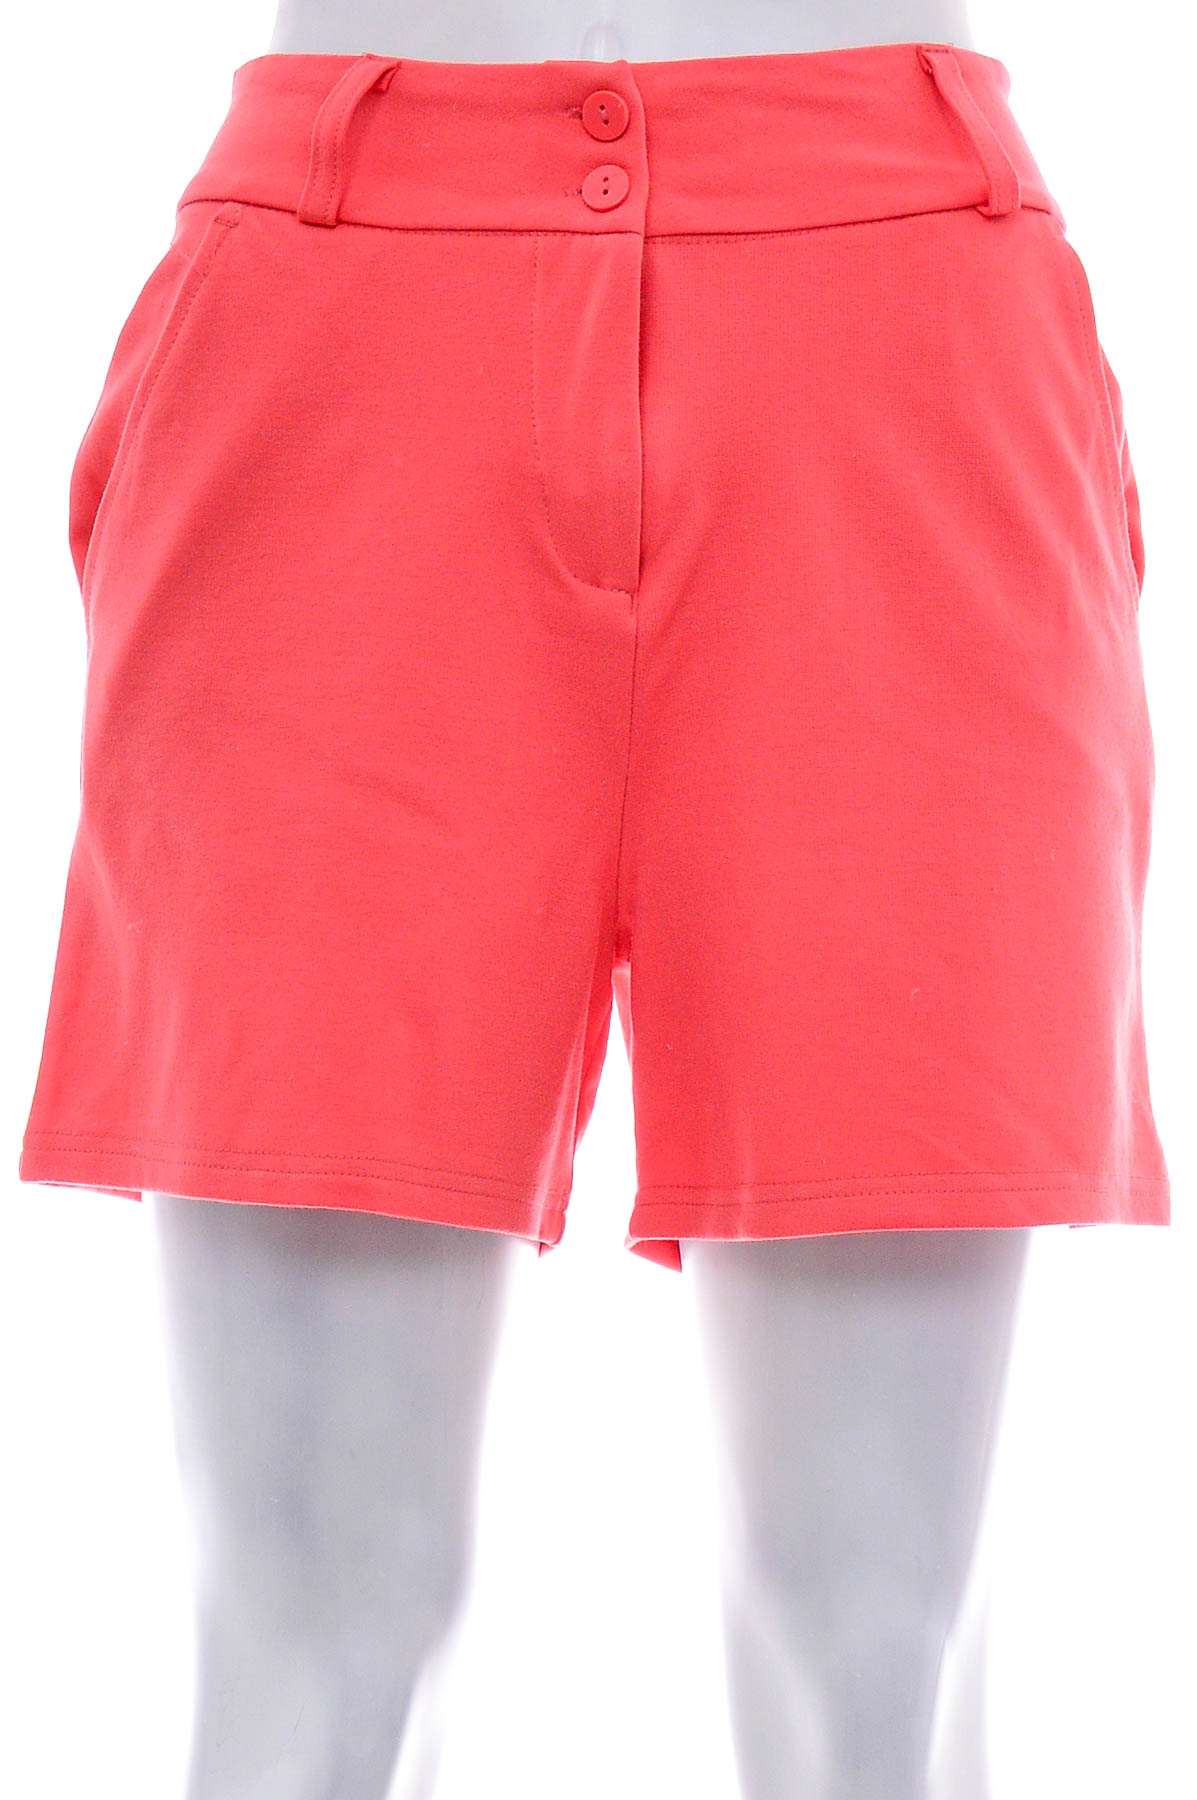 Female shorts - Ever.me - 0